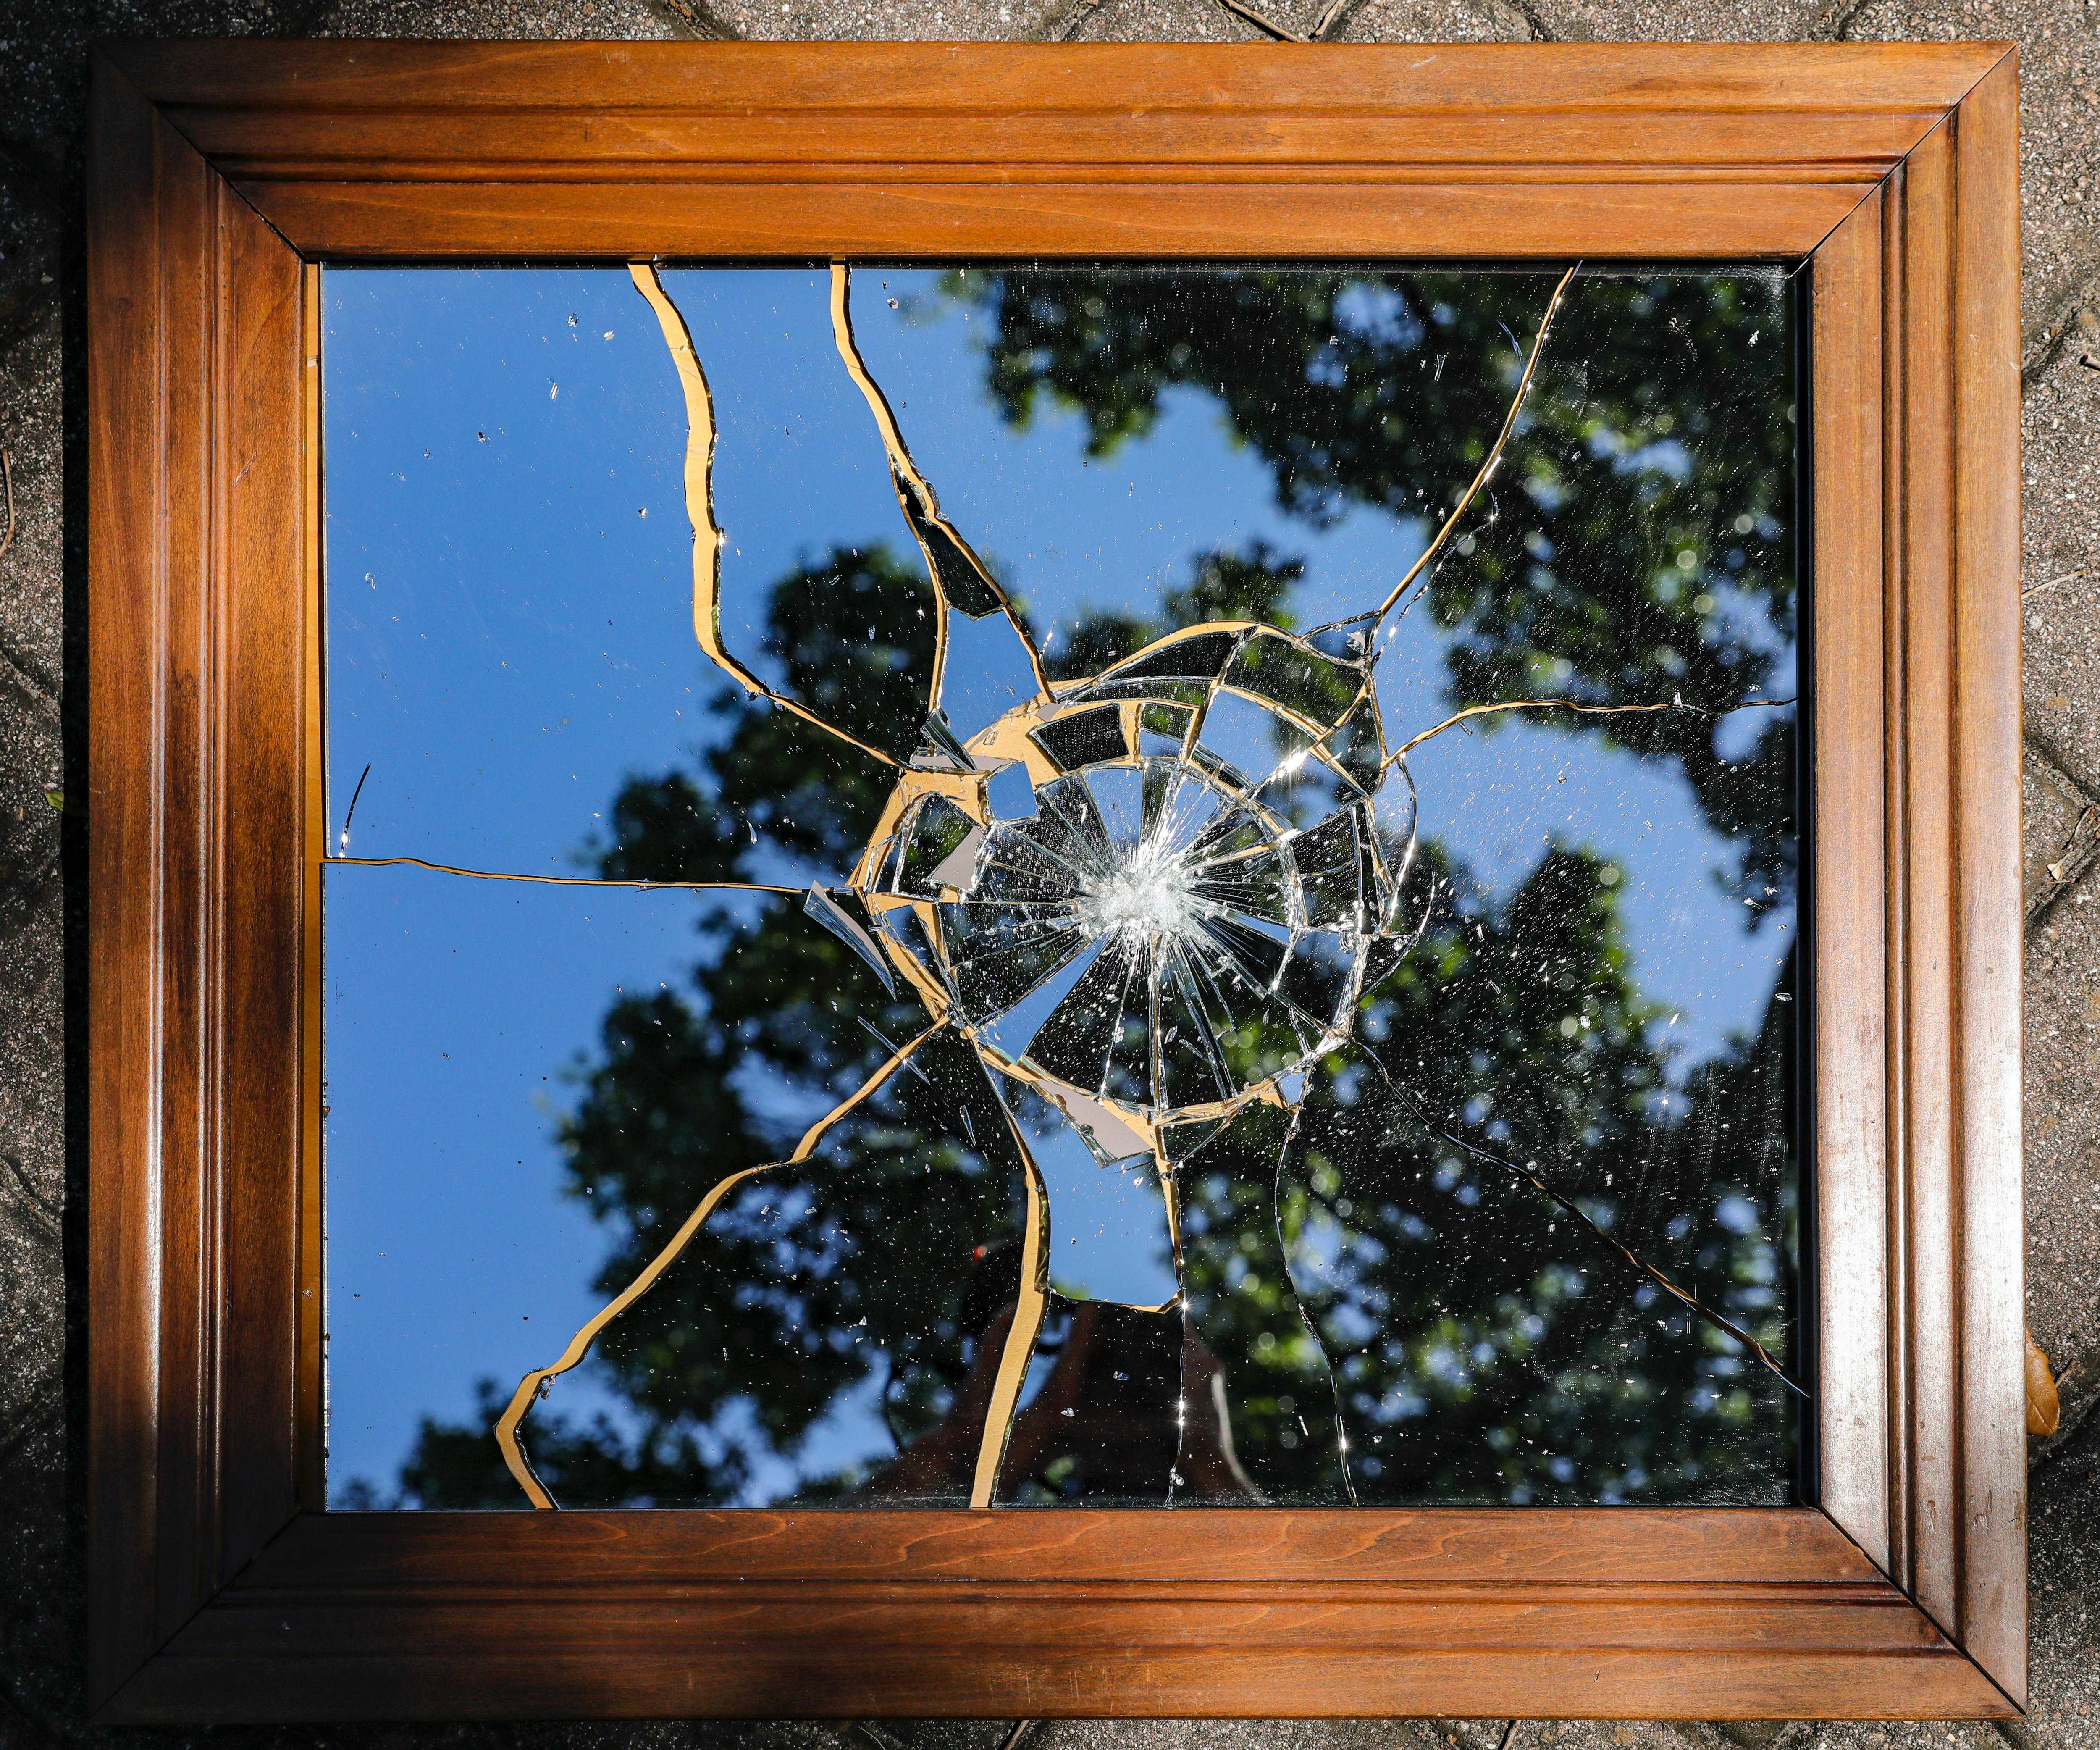 Разбить зеркало примета случайно дома. Разбитое зеркало. Треснутое зеркало. Разбитое зеркало в шкафу. Разбитое зеркало примета.